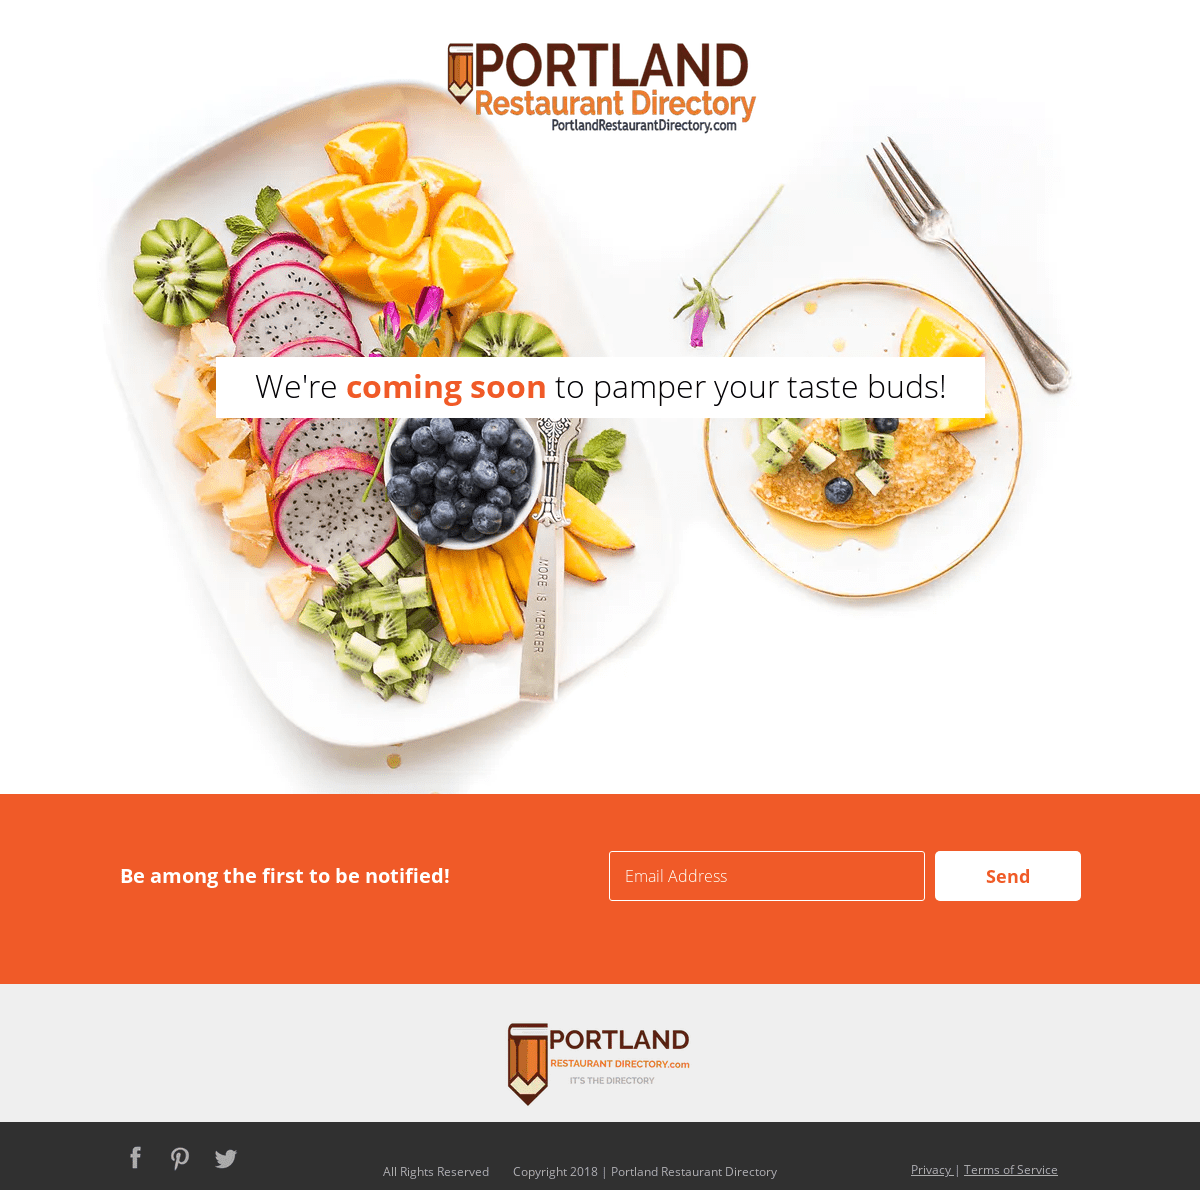 A complete backup of portlandrestaurantdirectory.com